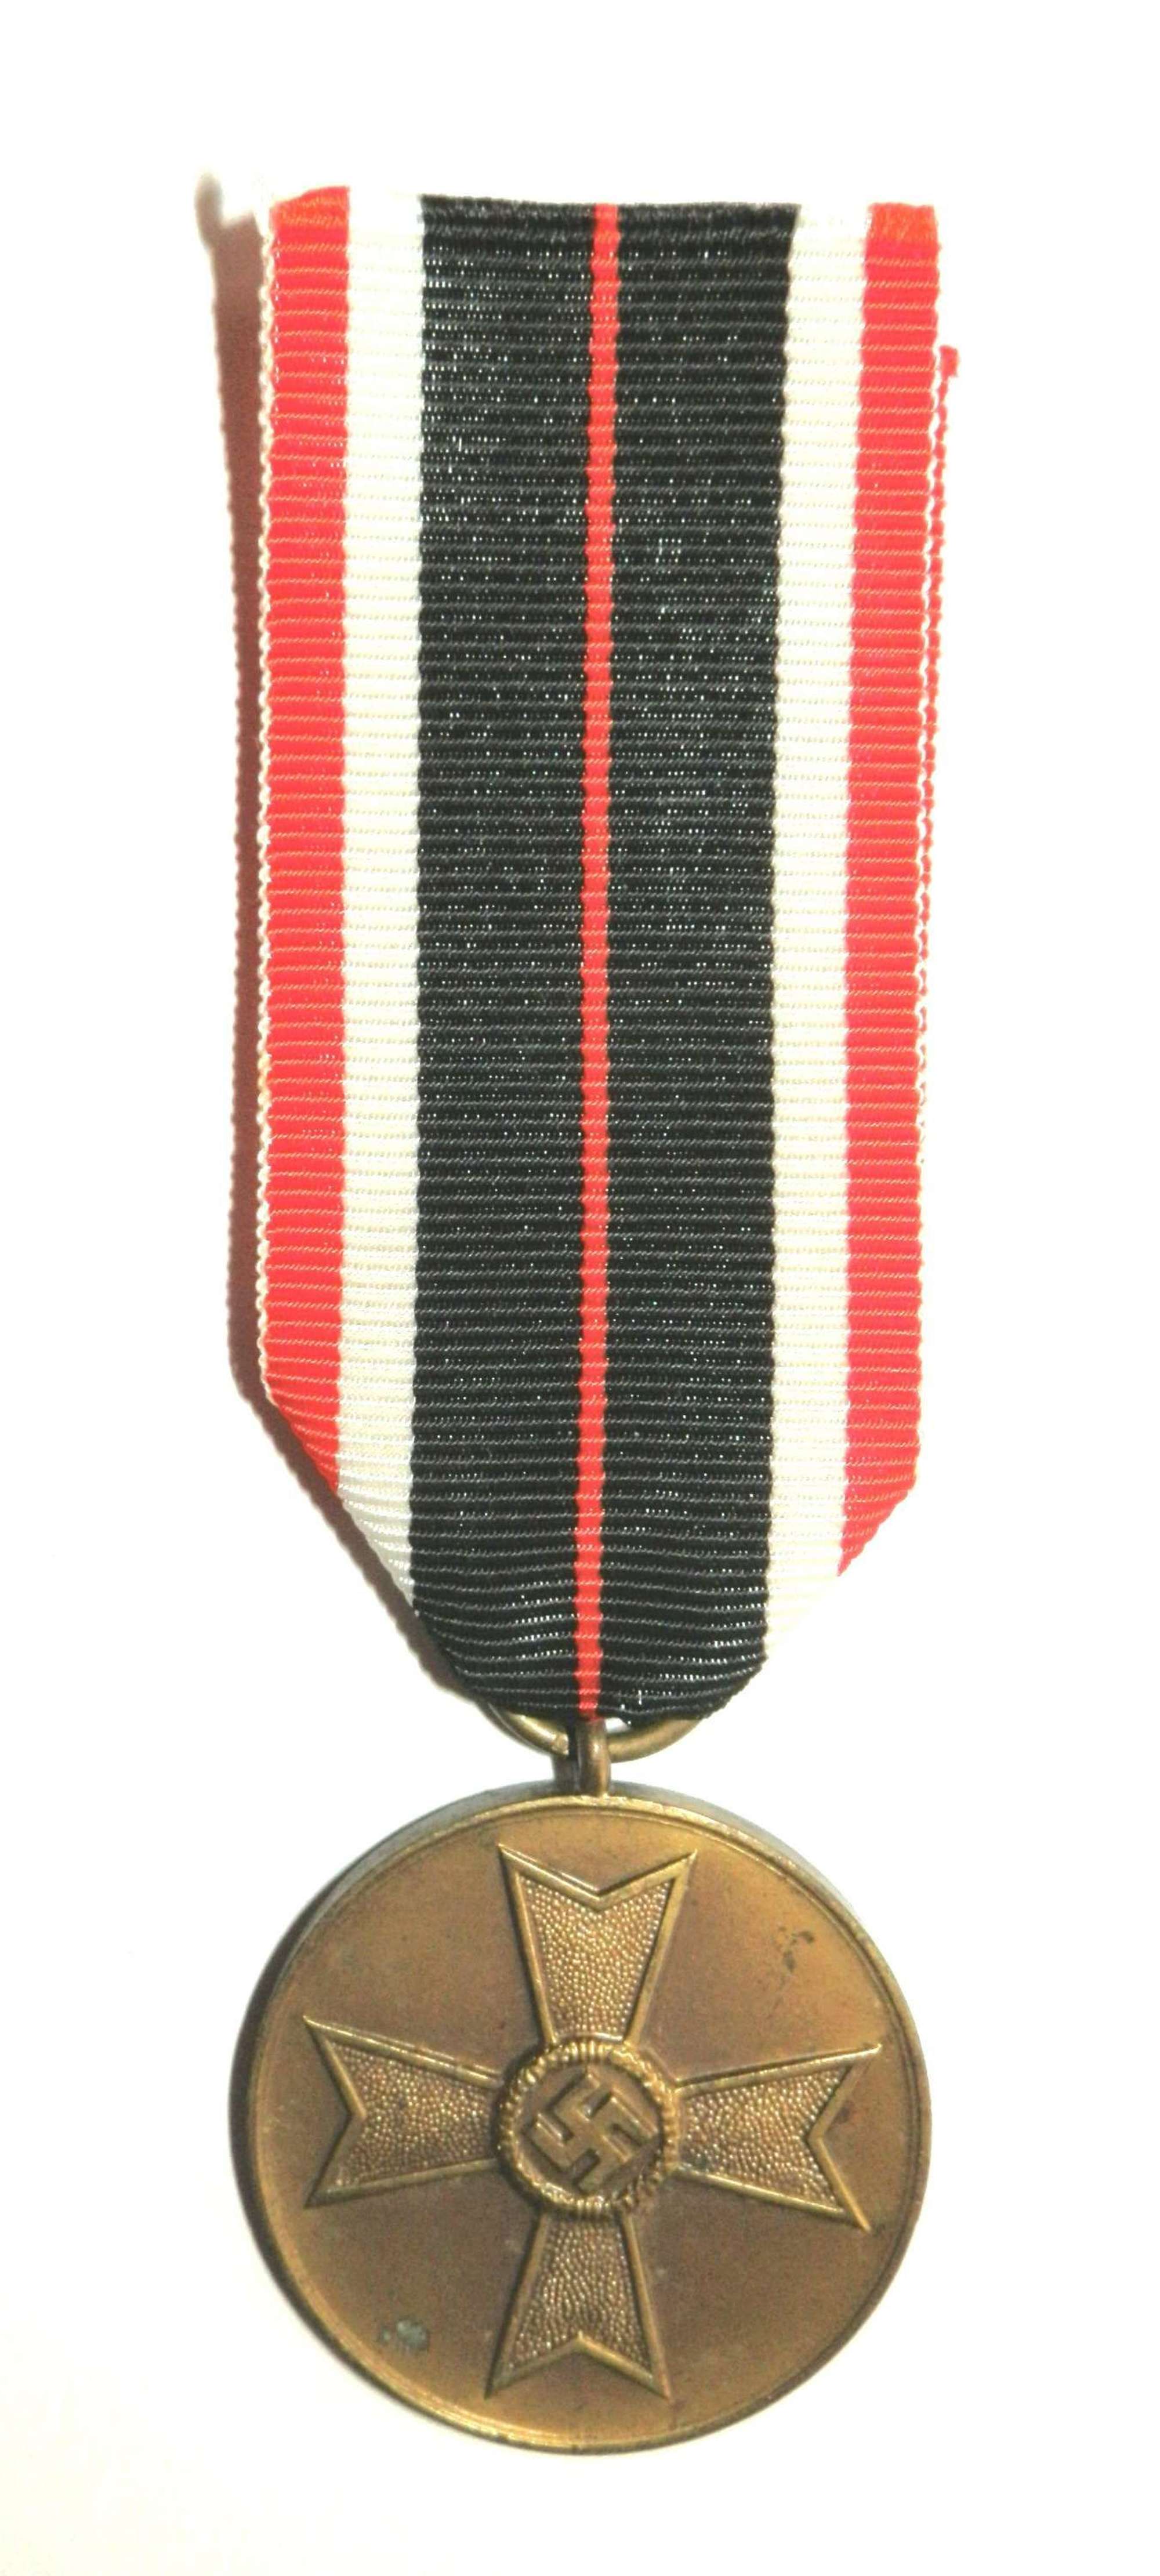 War Merit Medal. Maker marked 60.